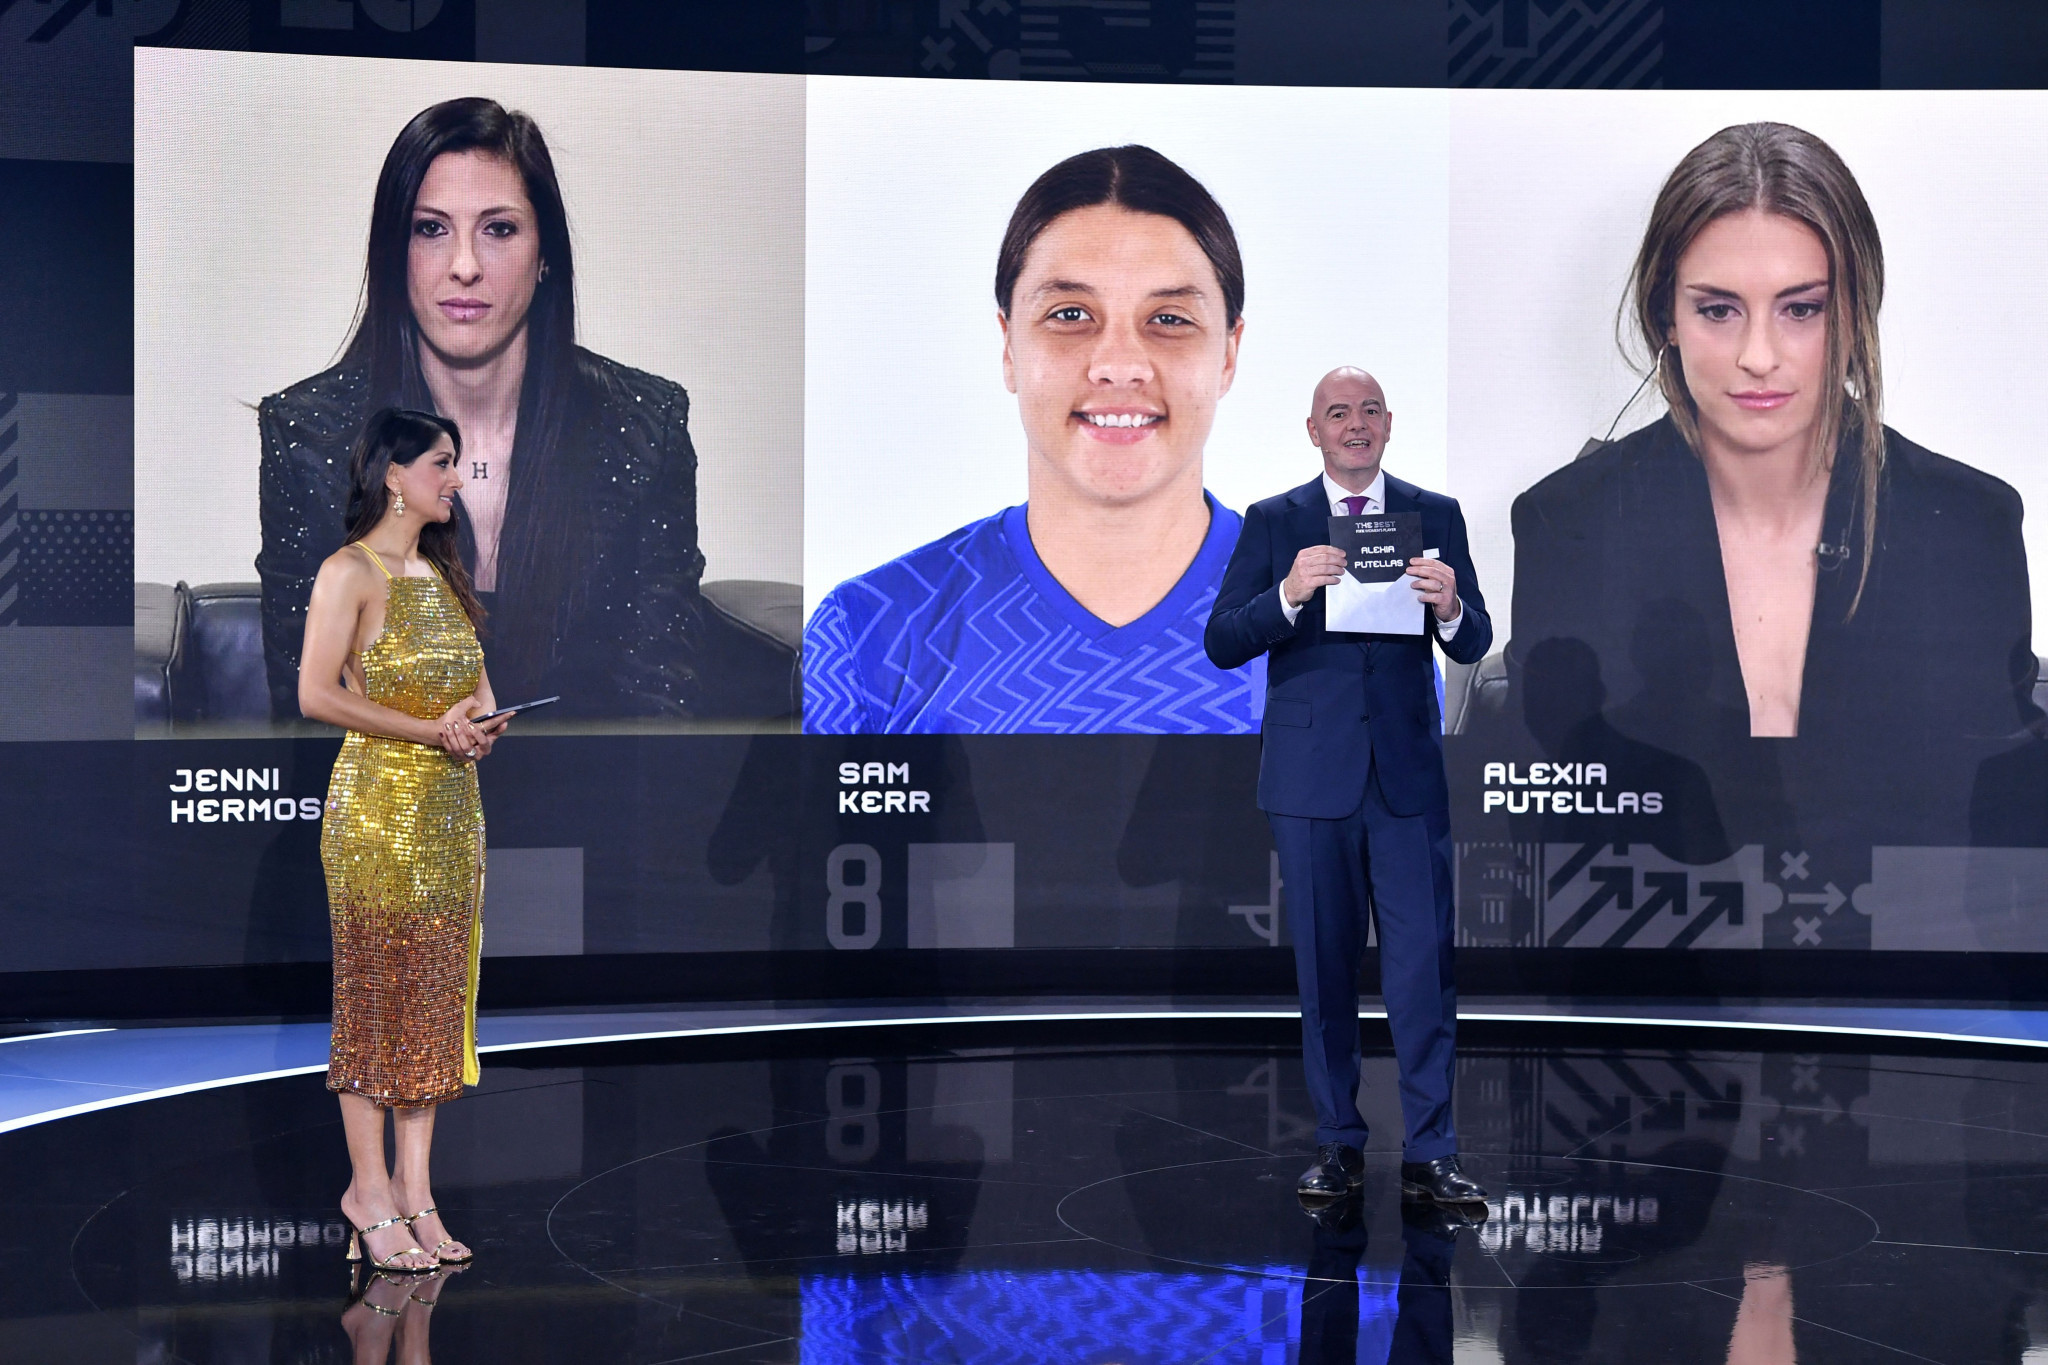 Putellas and Lewandowski earn top honours at Best FIFA Football Awards